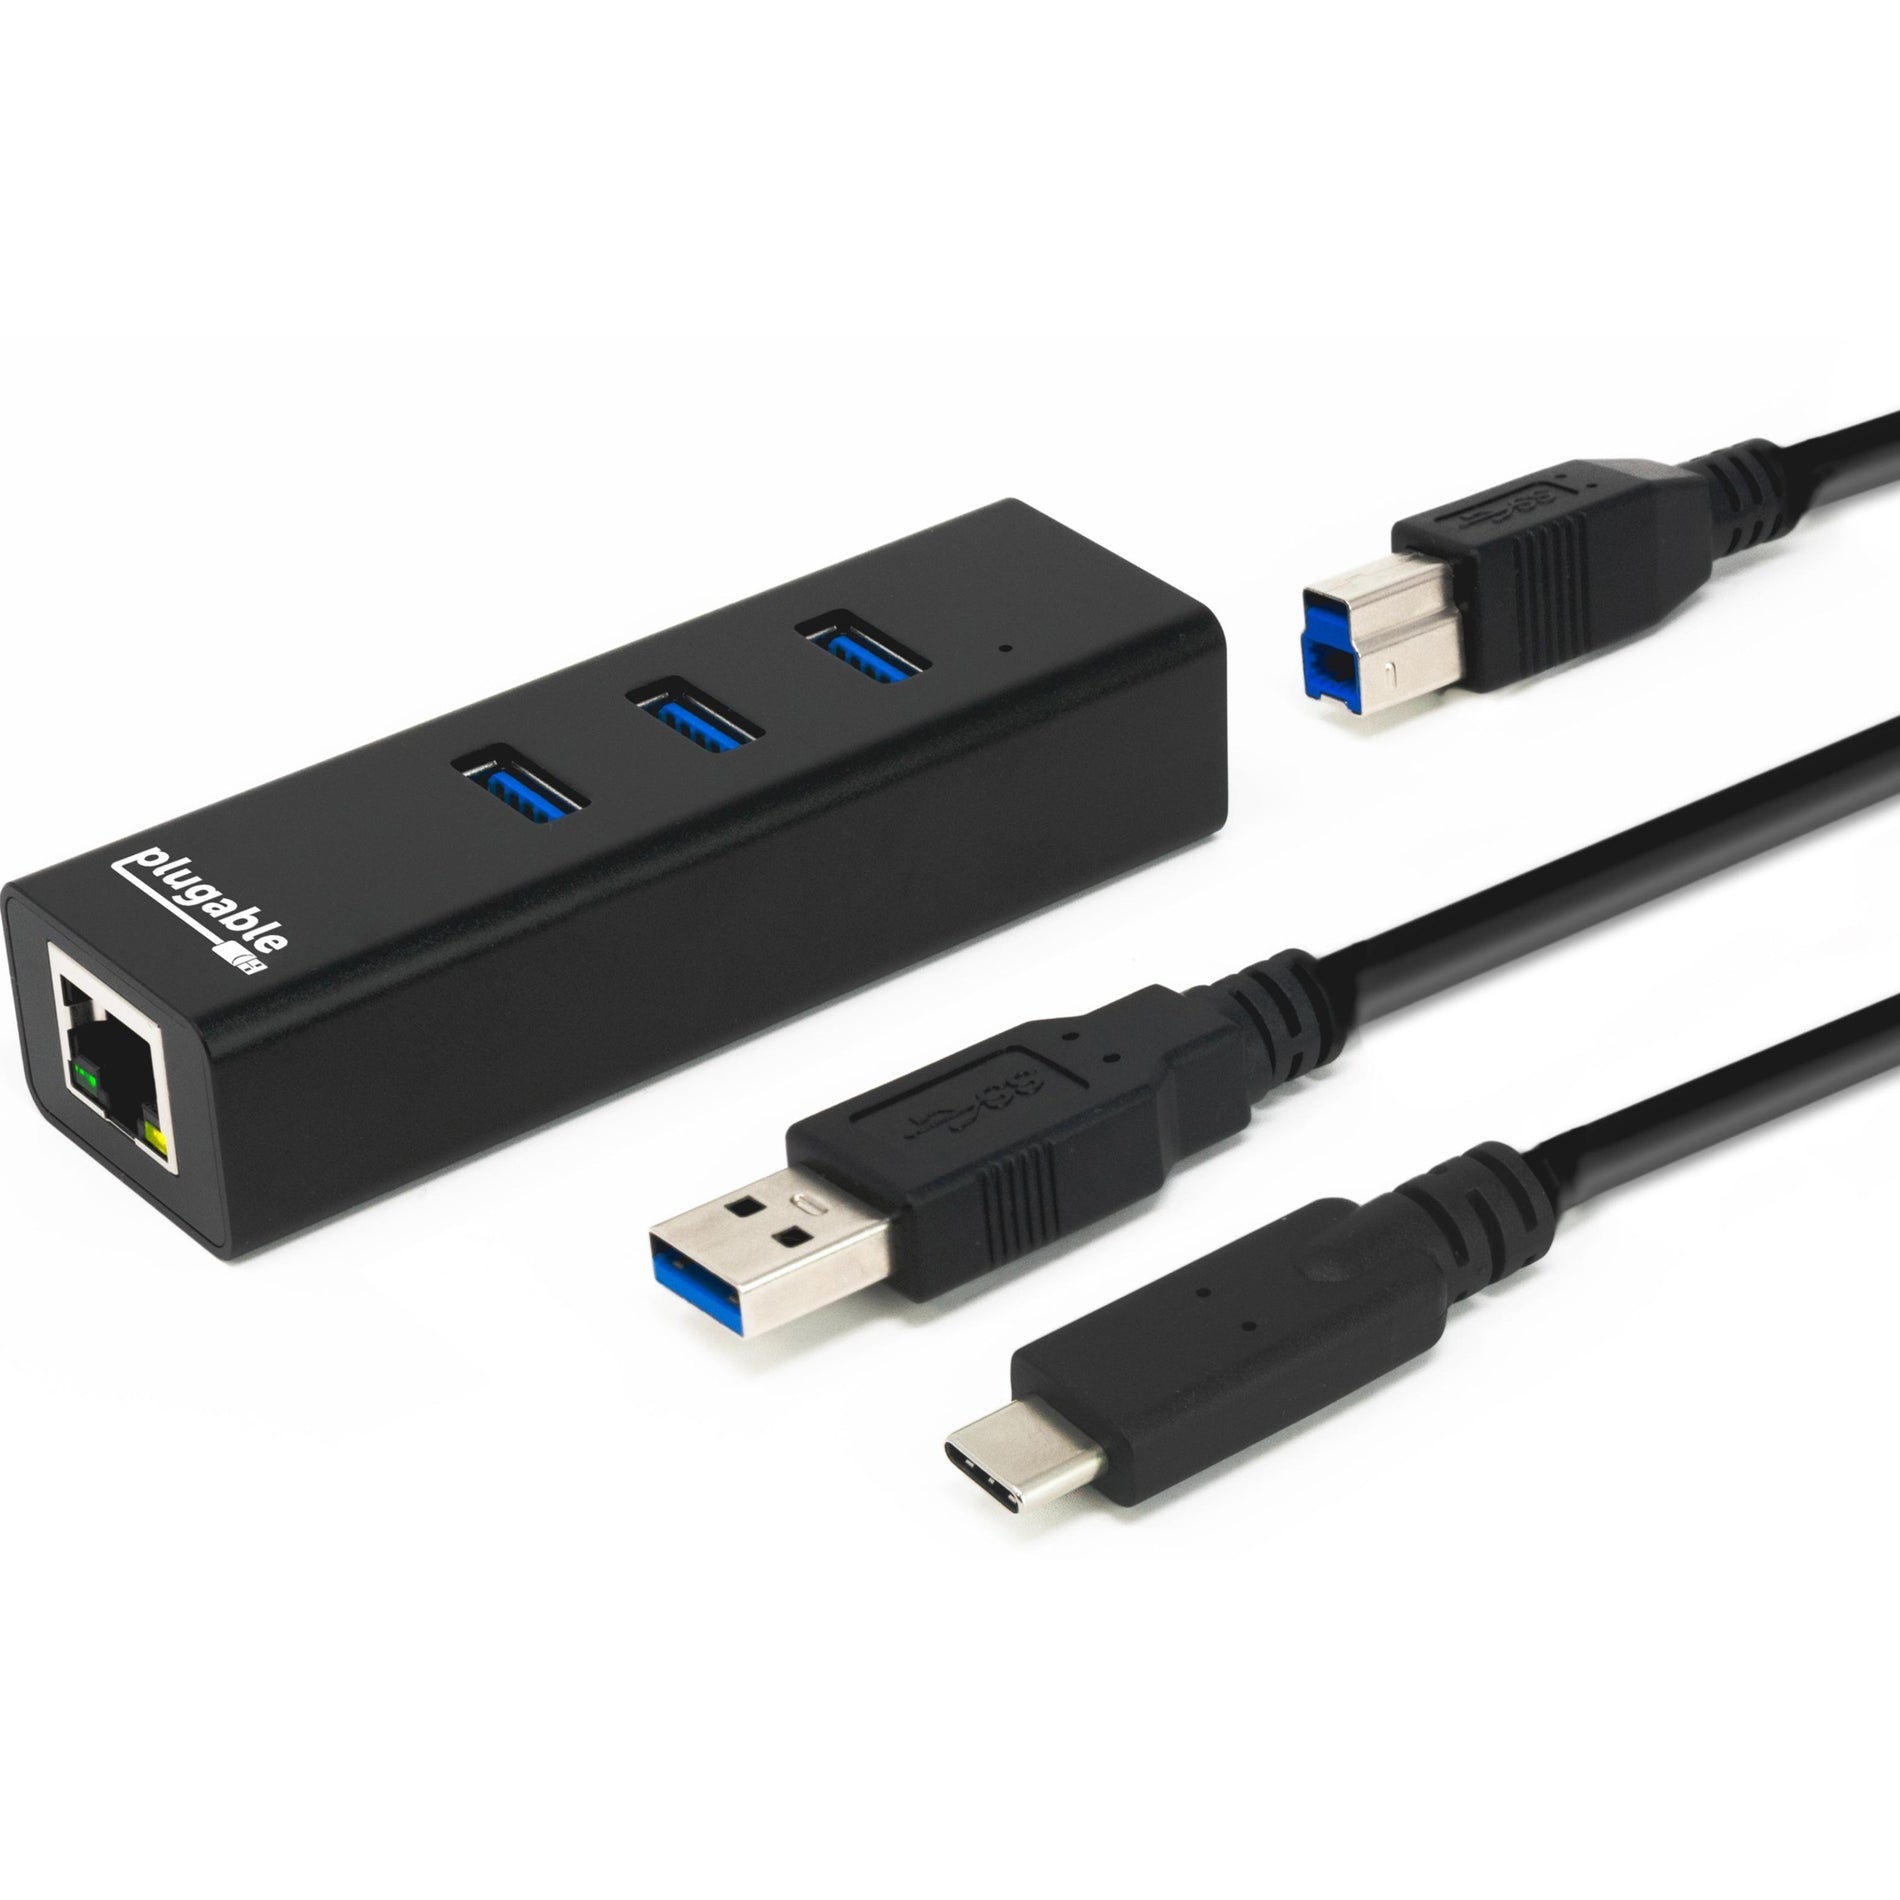 Concentrateur USB Plugable USB3-HUB3ME USB 3.0 ADAPTATEUR ETHERNET GIGABIT Concentrateur USB 3 ports avec Ethernet